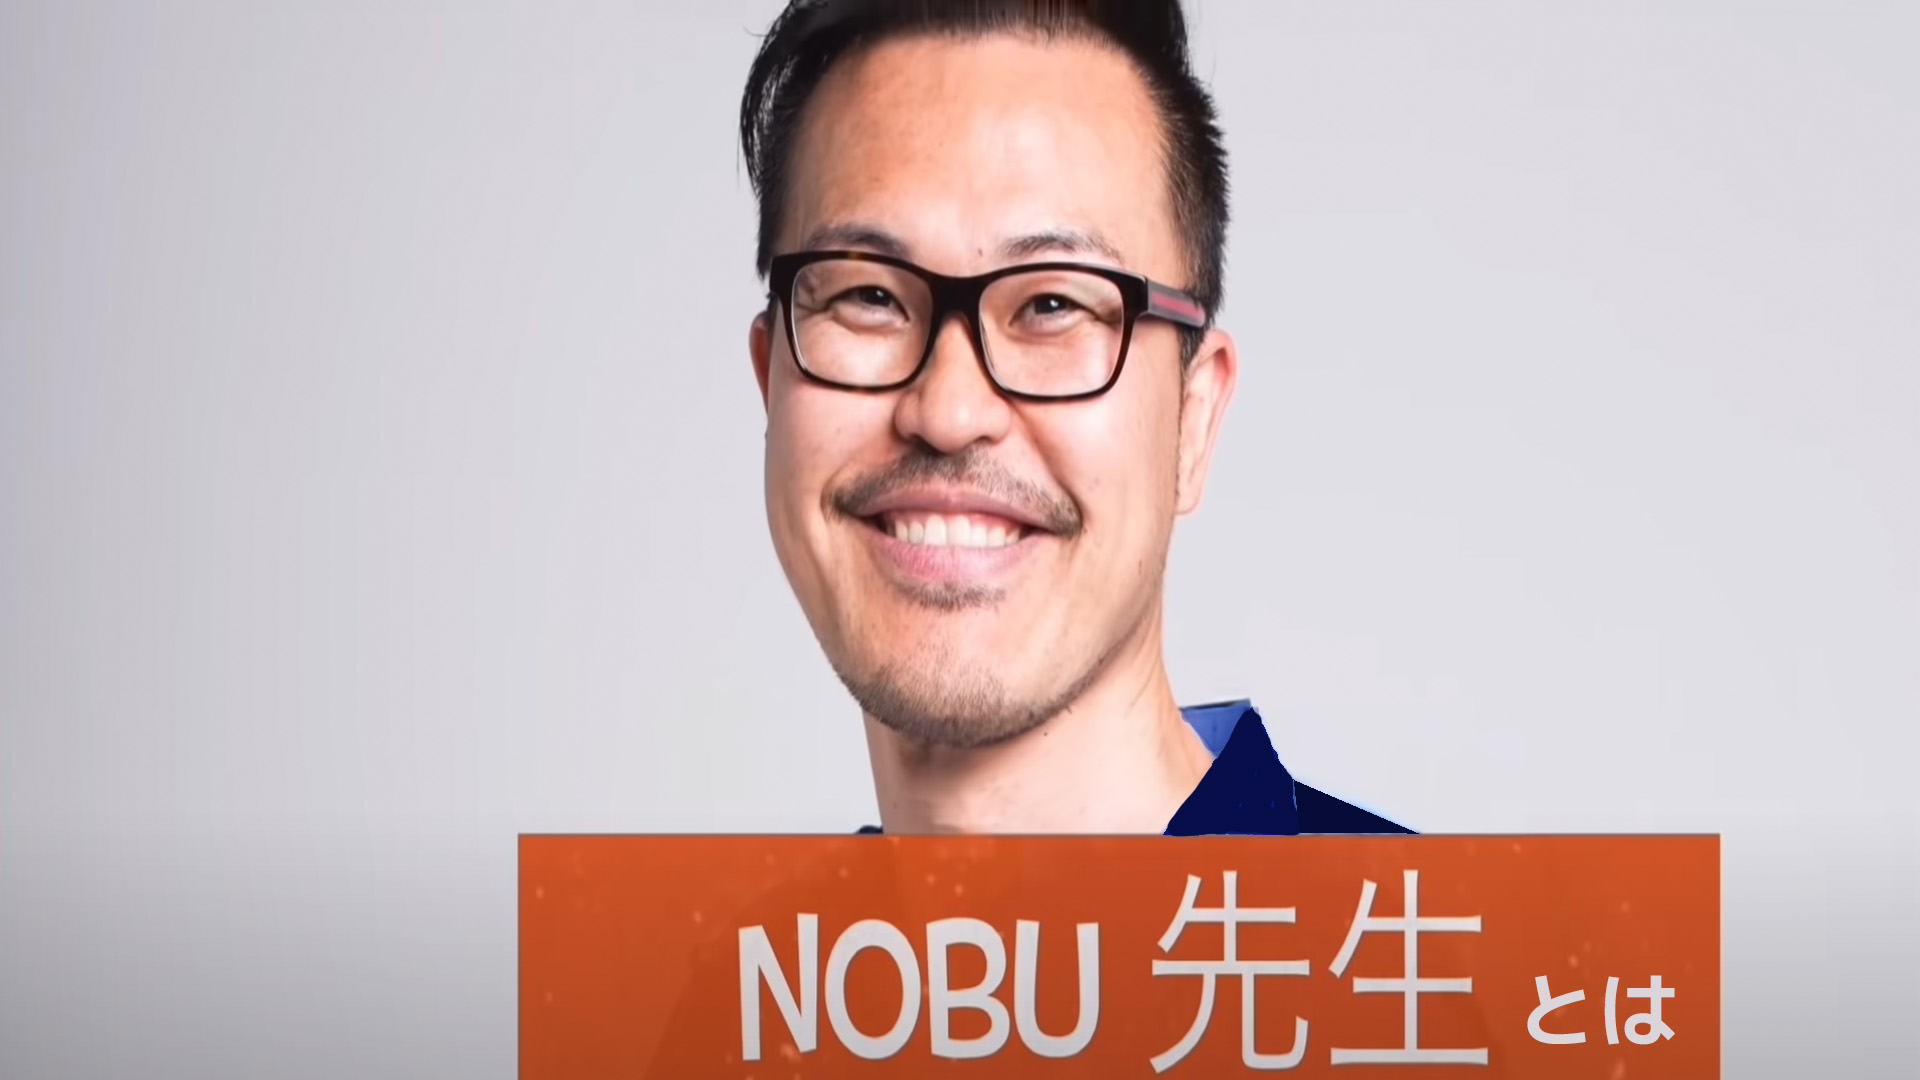 nobu先生とはのイメージ画像